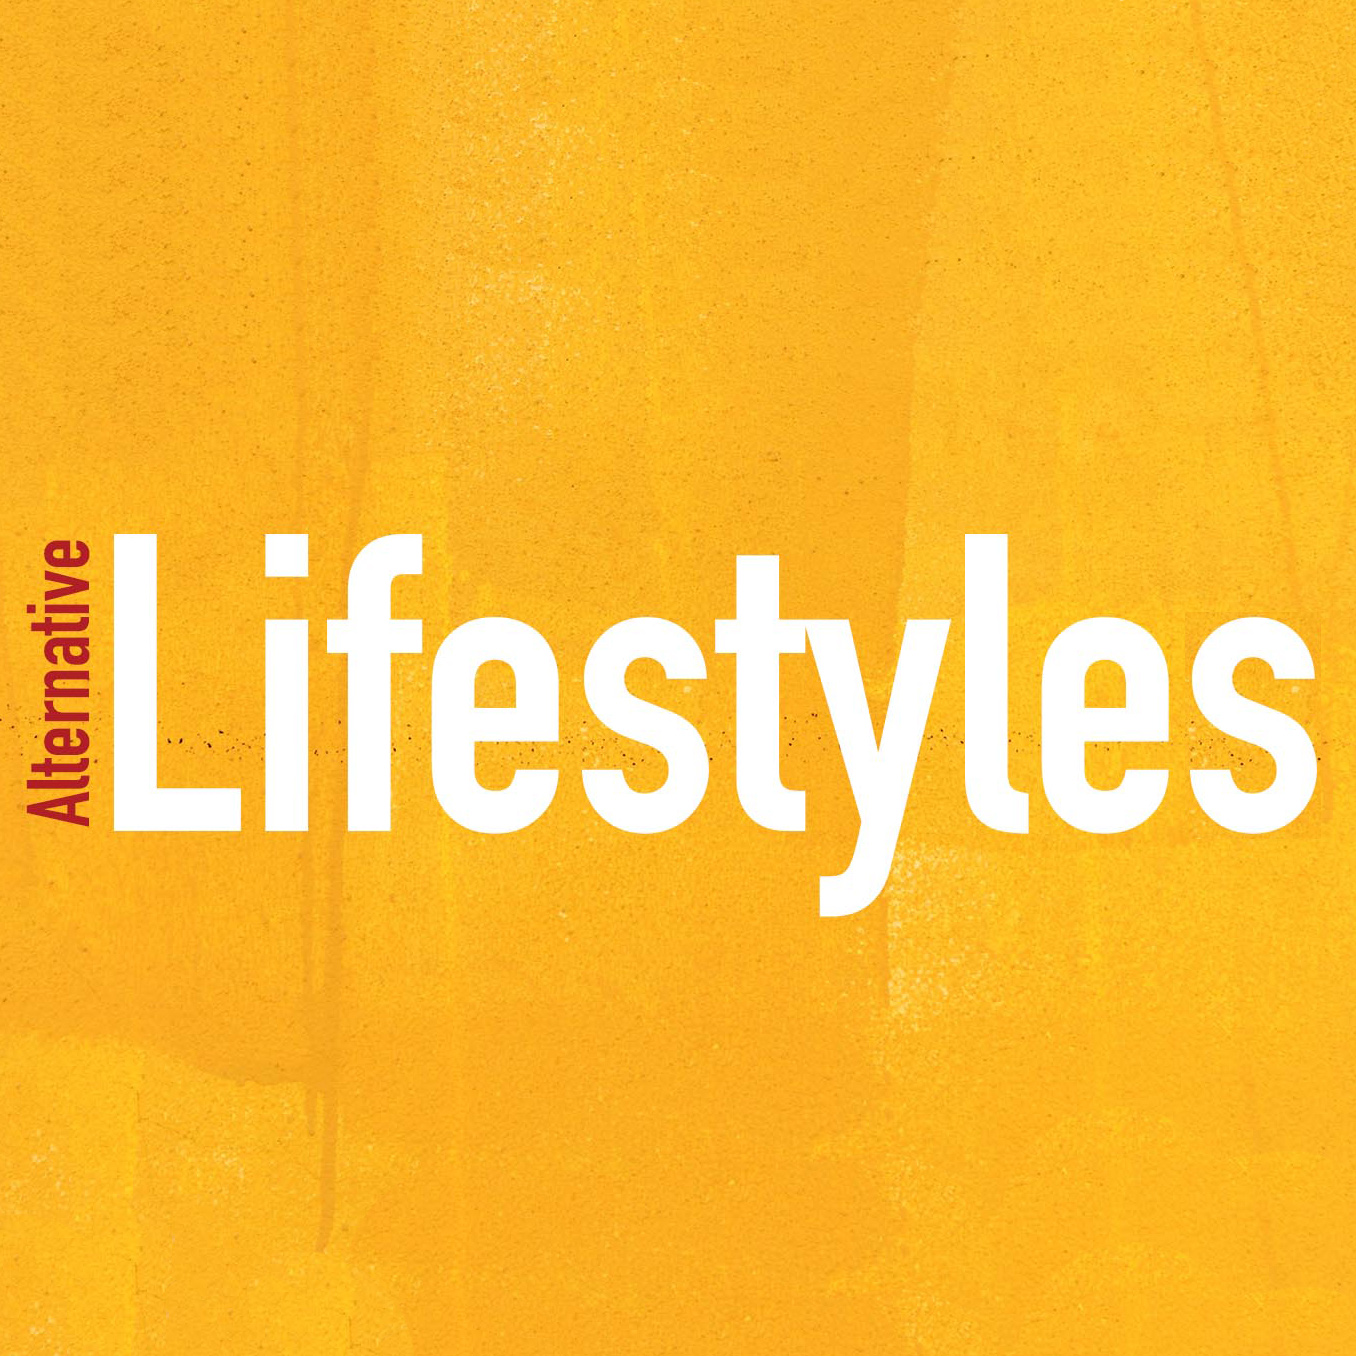 Life styles图书批发、出版社